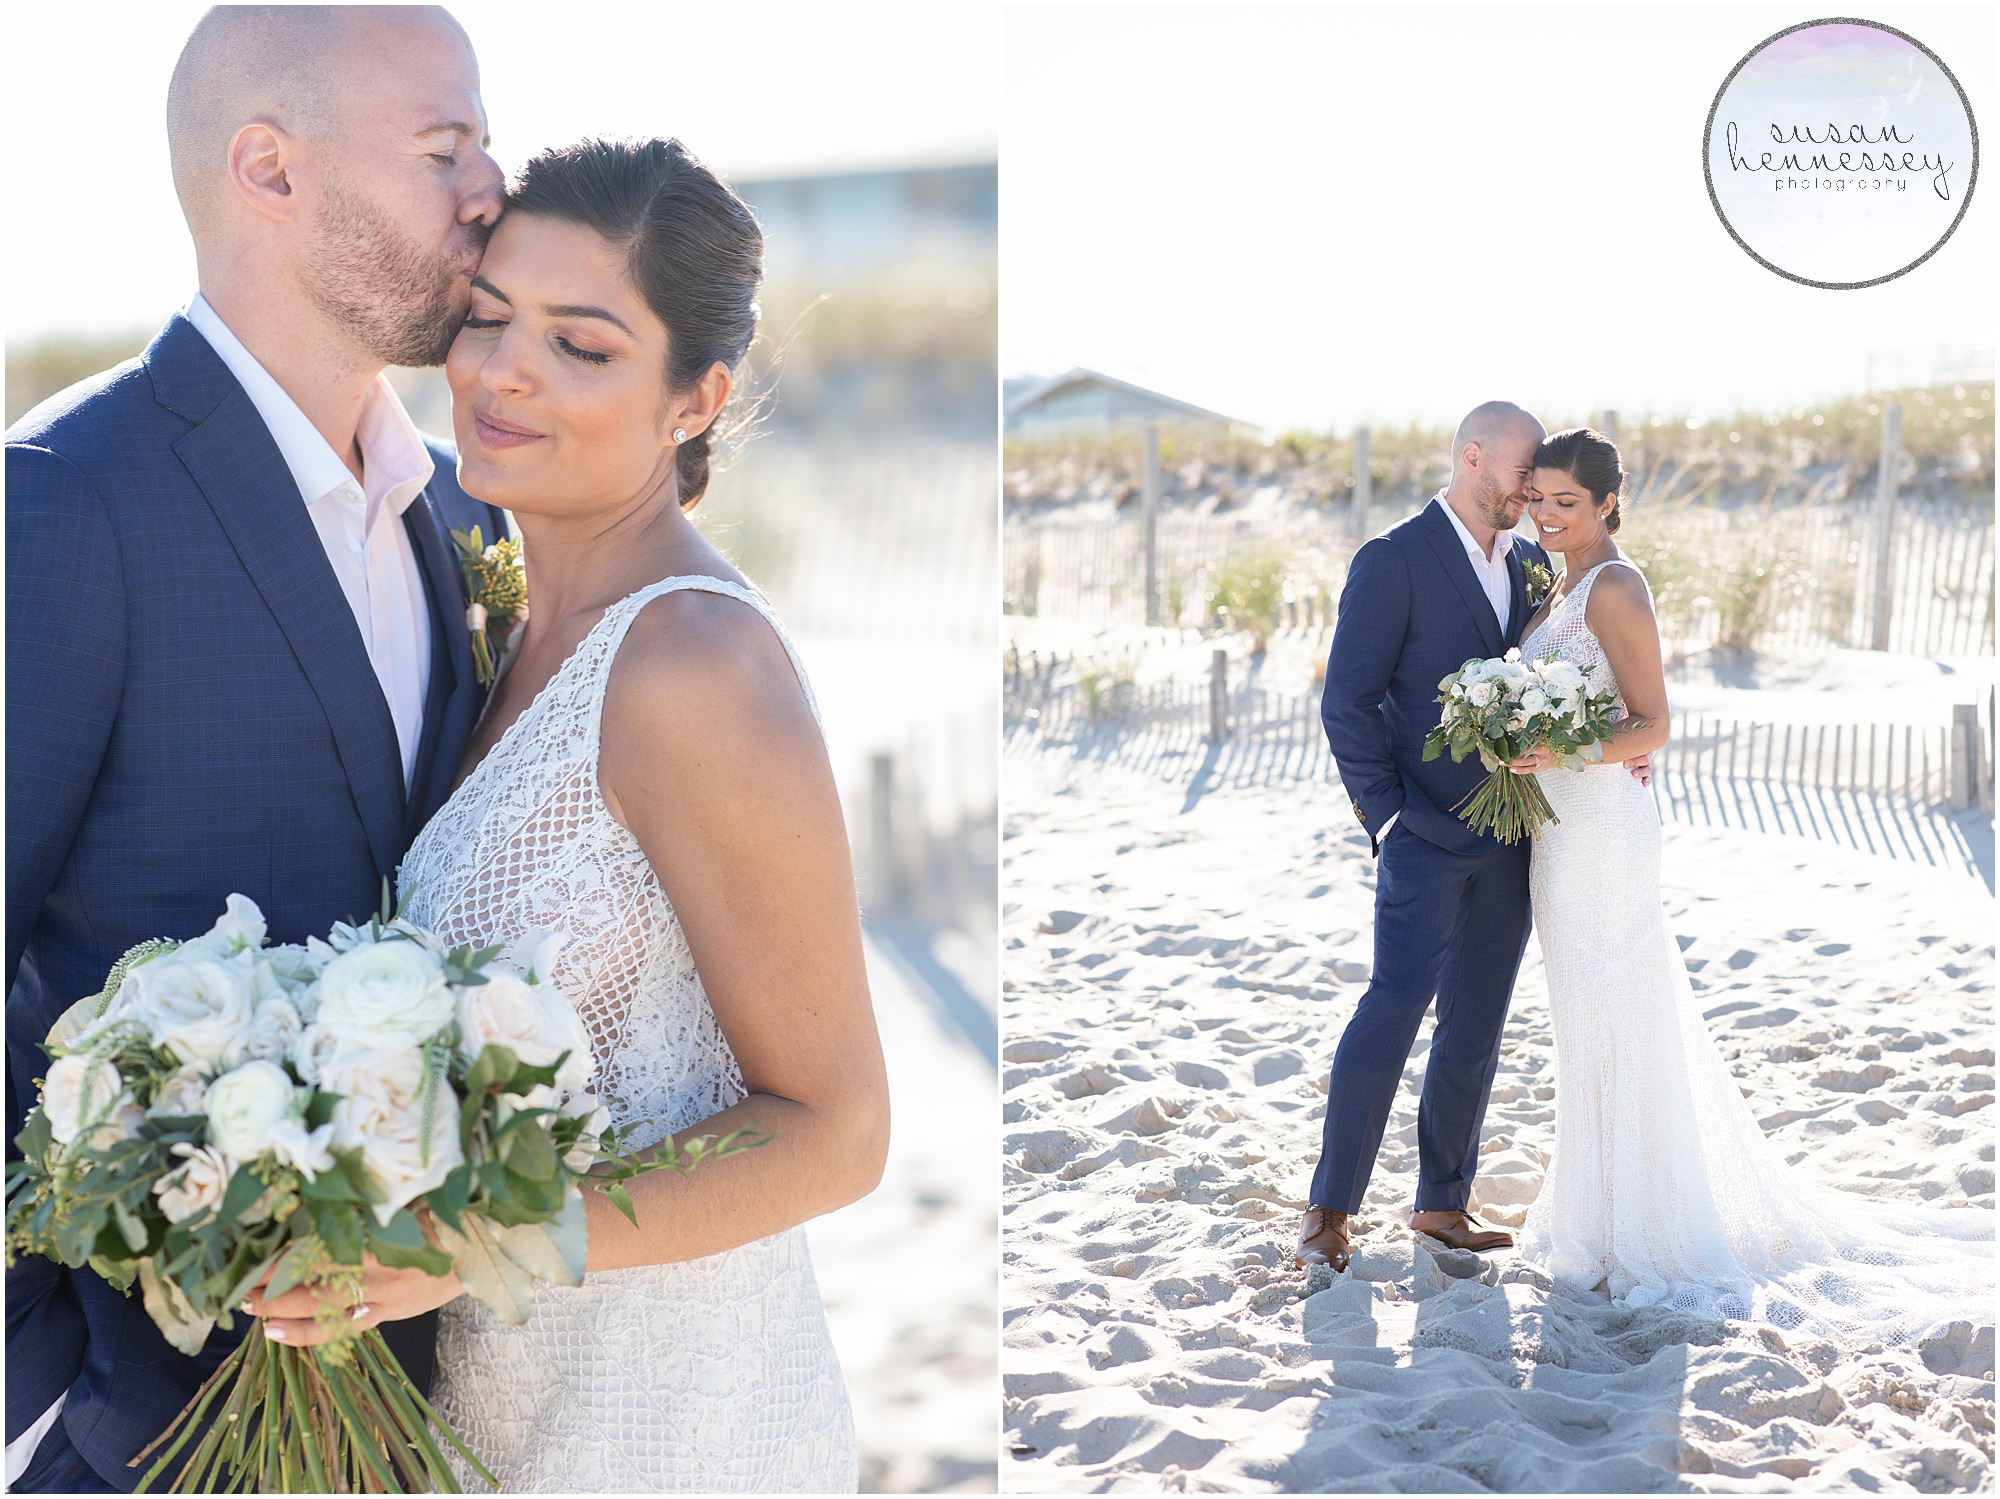 Romantic wedding portraits of bride and groom at Long Beach Island Microwedding